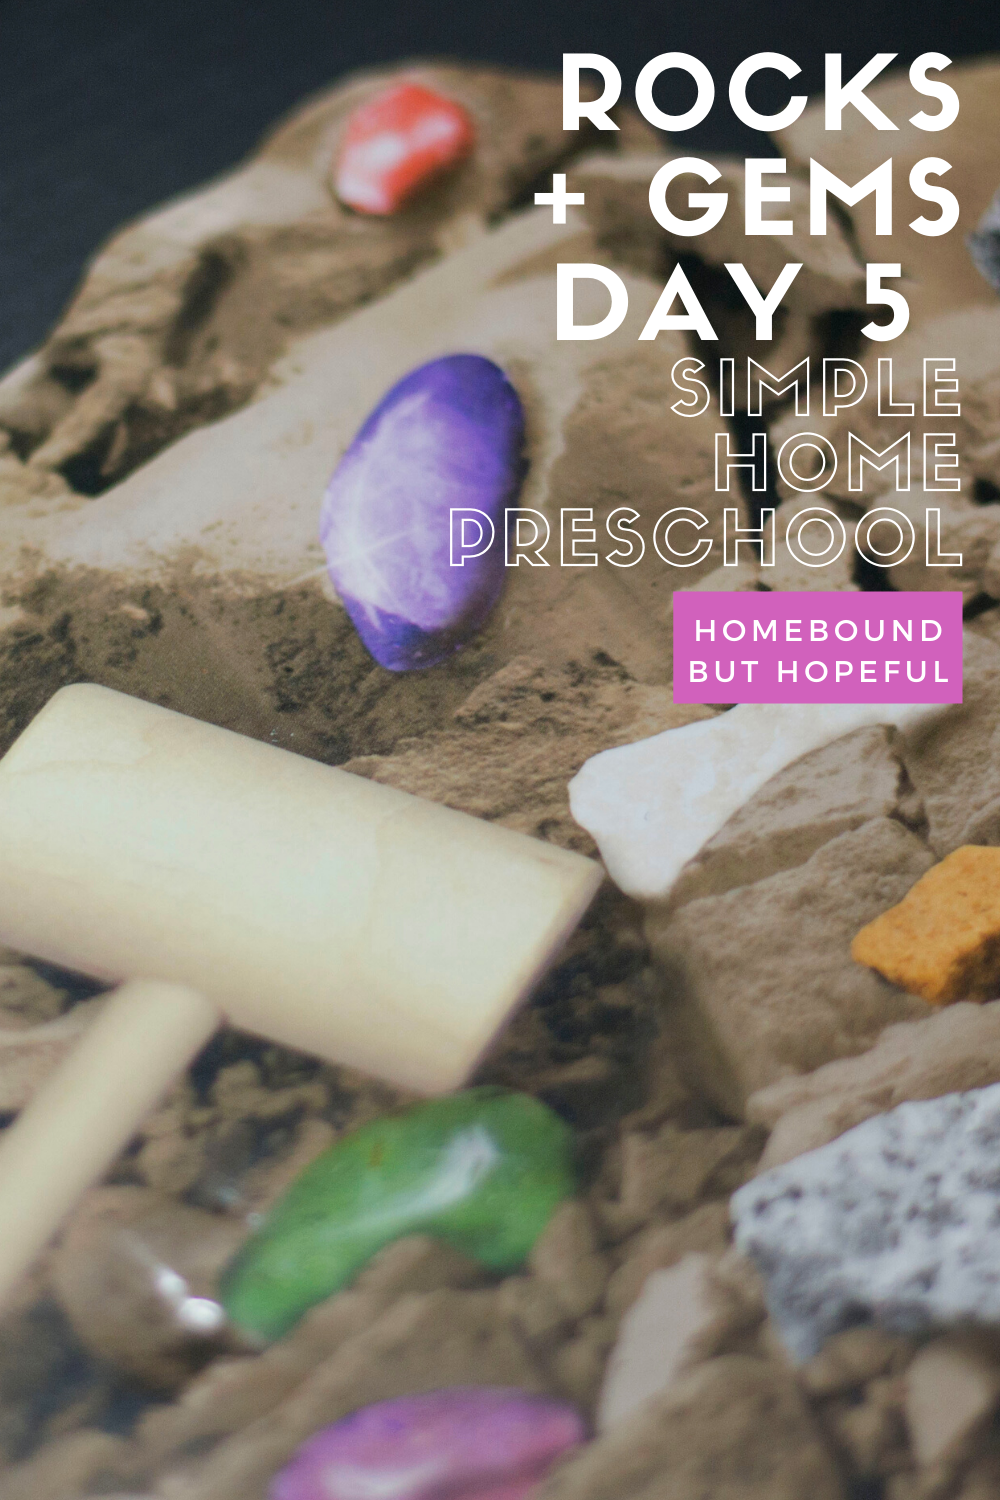 'Dig in' to our final day in a week of fun and simple home preschool ideas inspired by rocks, gems, and crystals. #homeschool #sensoryplay #preschoolideas #preschoolactivities #preschooler